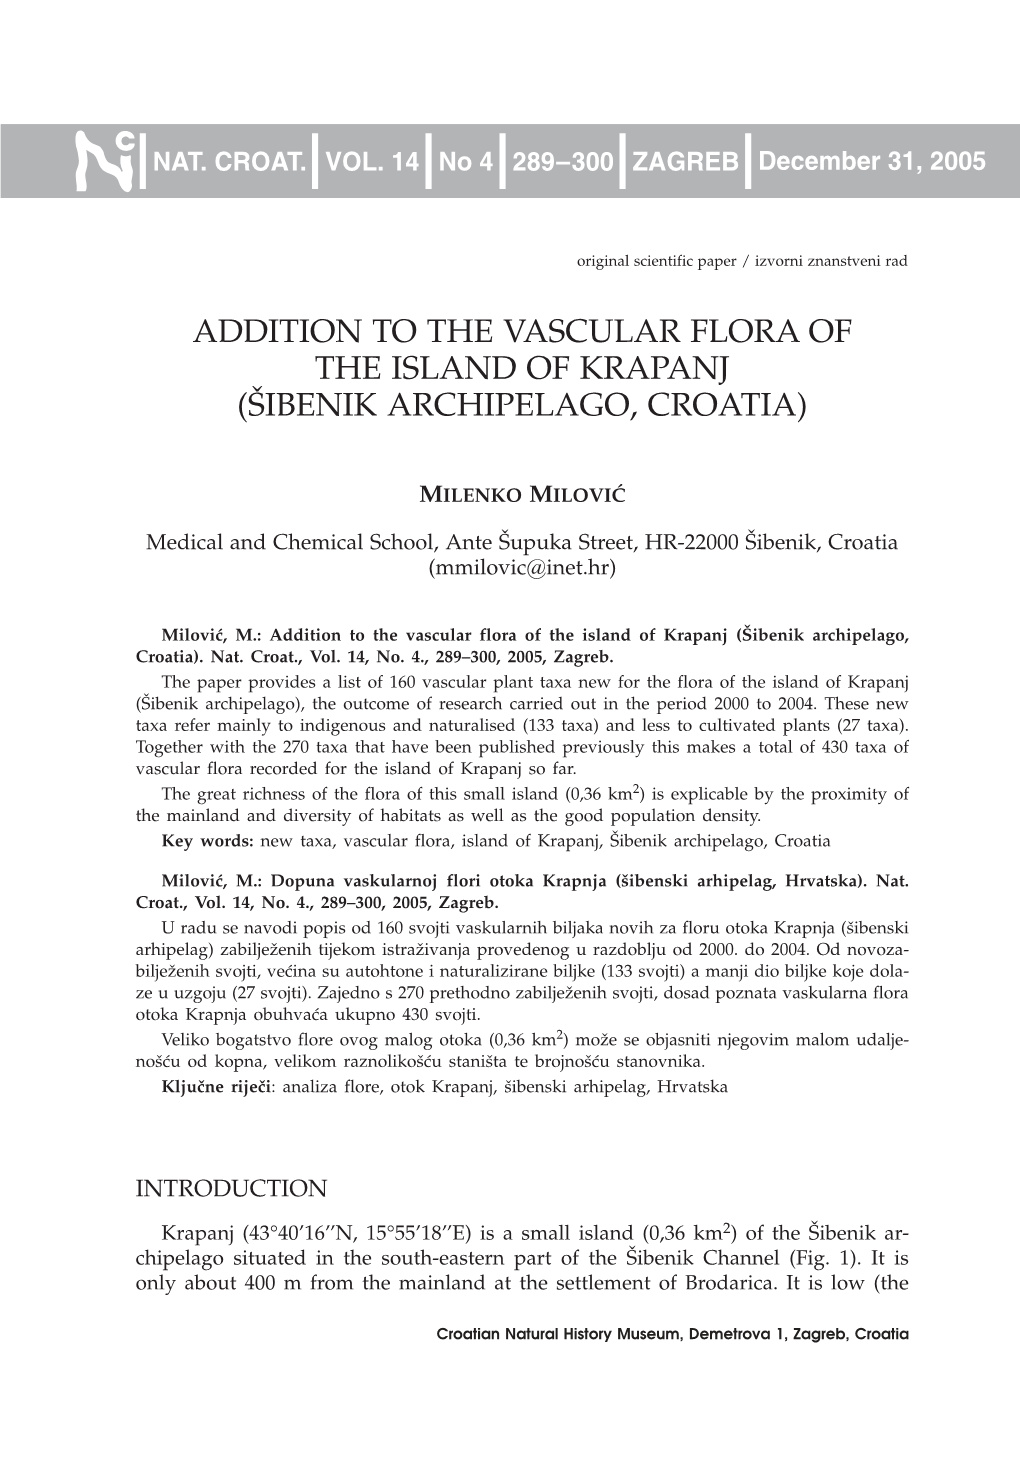 Addition to the Vascular Flora of the Island of Krapanj ([Ibenik Archipelago, Croatia)